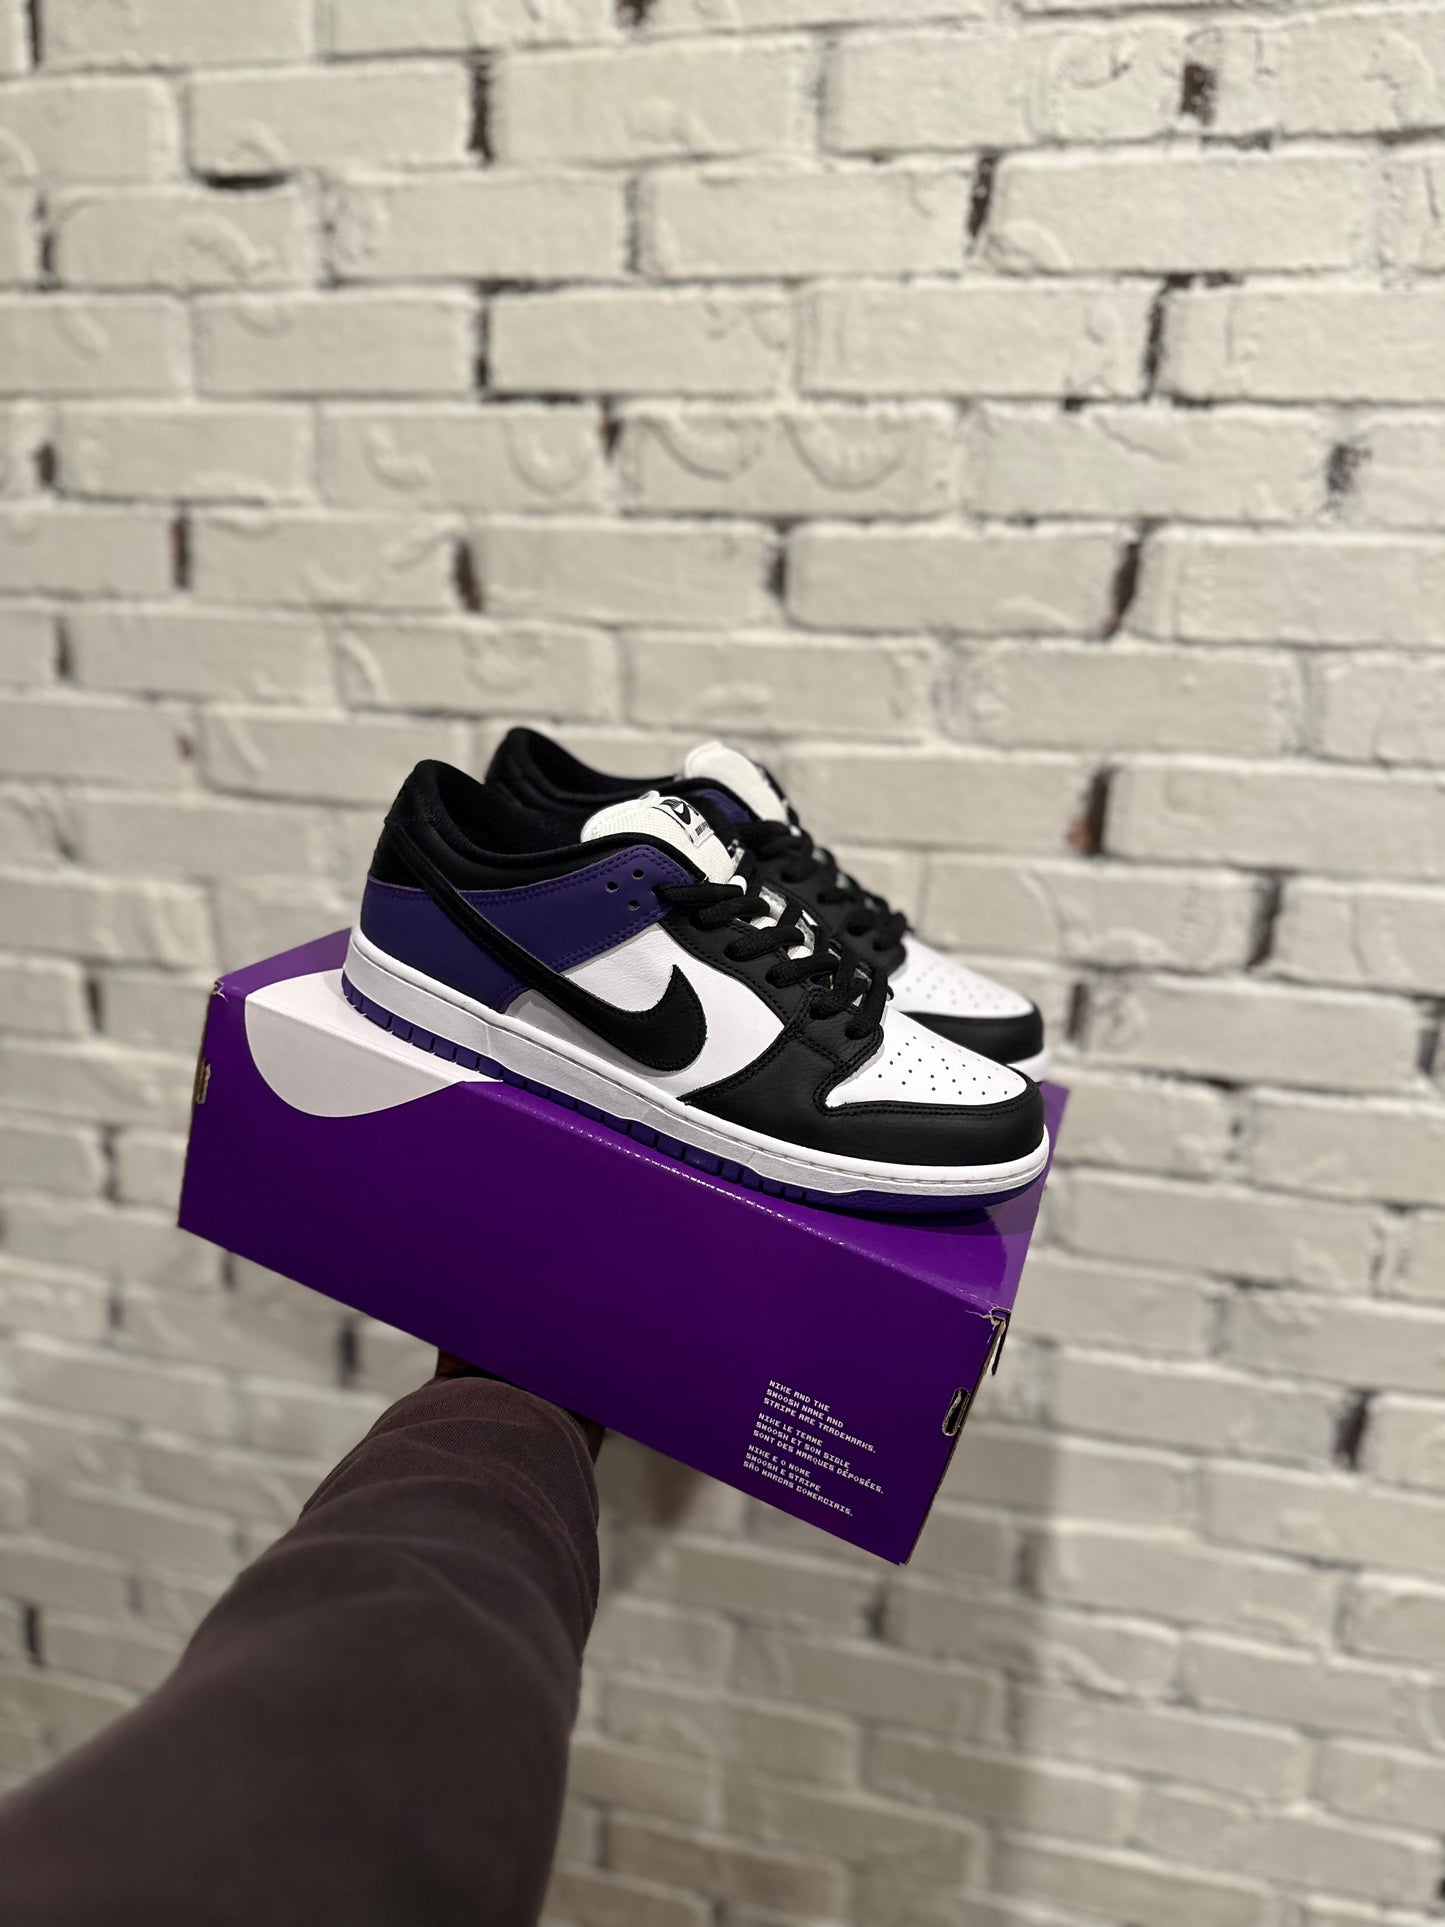 Nike SB Dunk Low “Court Purple” Size 10.5 DS OG